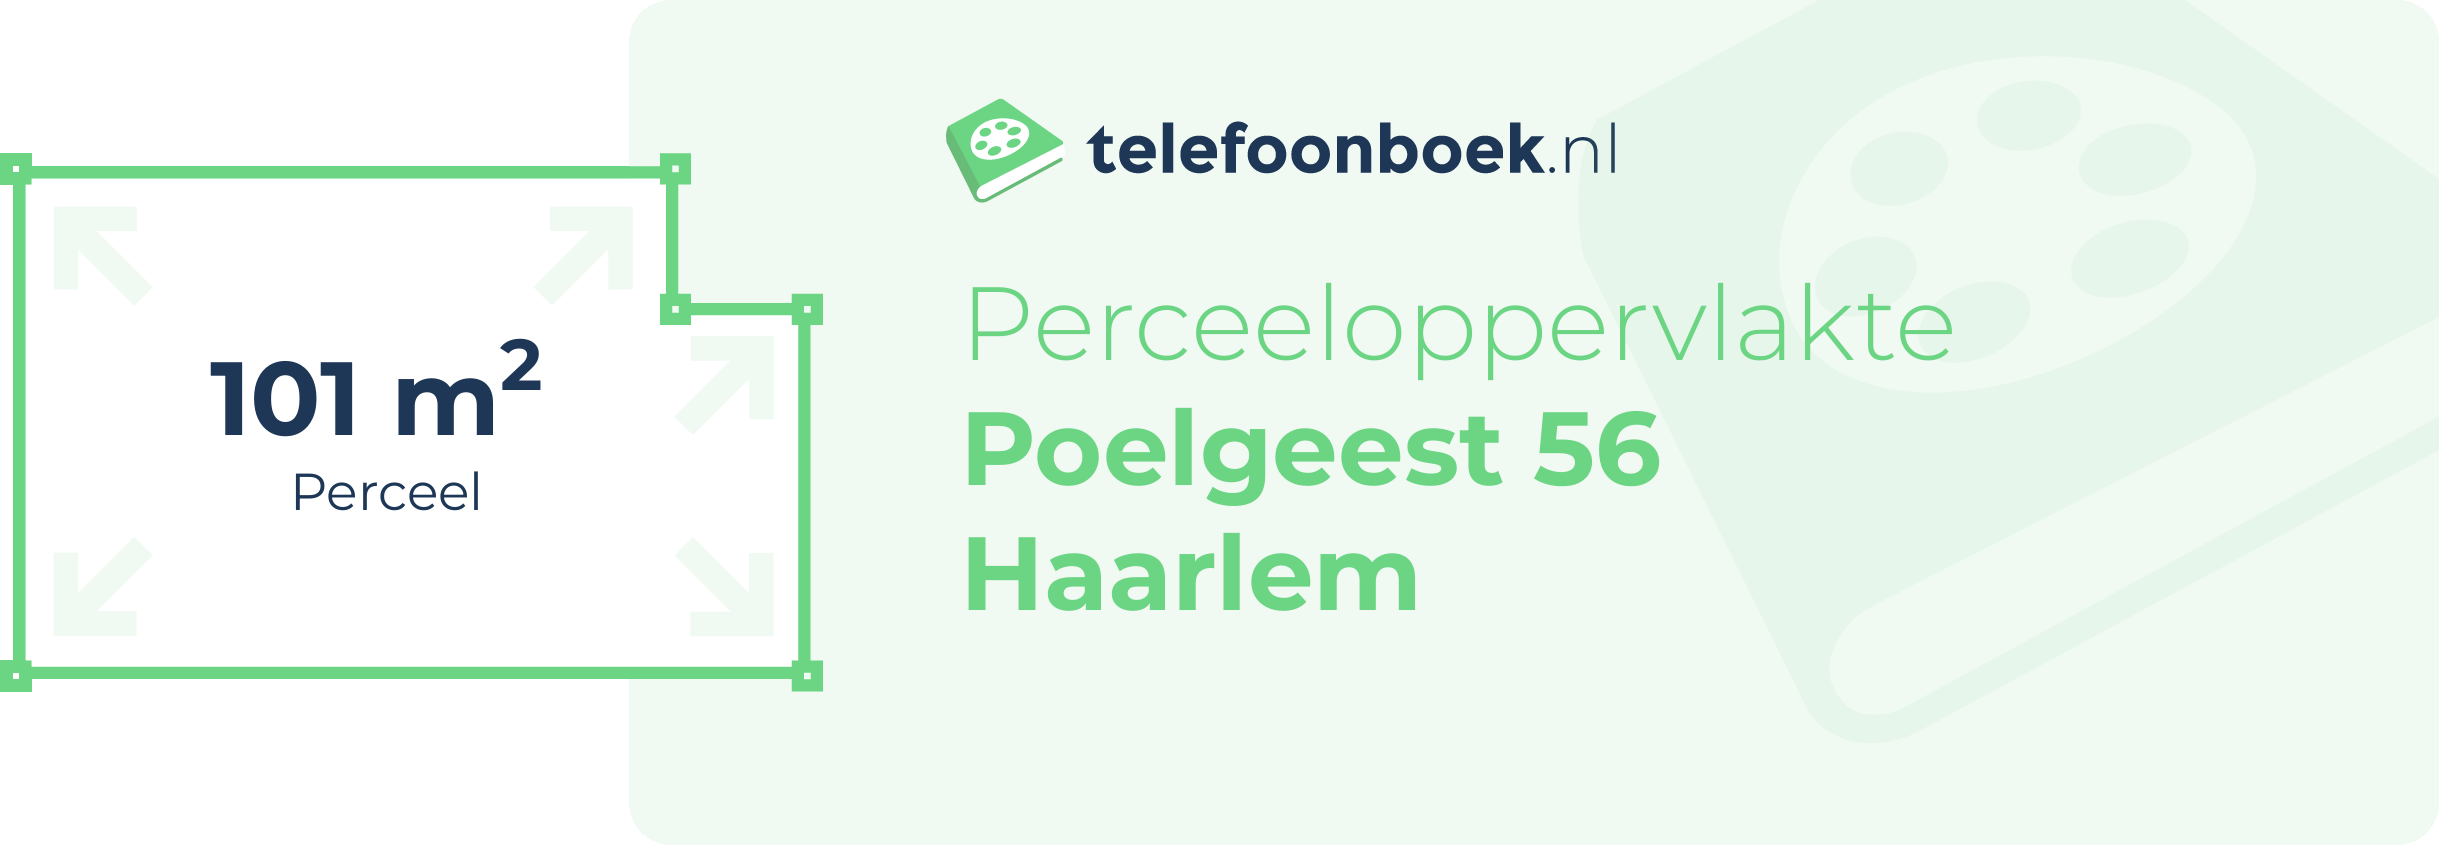 Perceeloppervlakte Poelgeest 56 Haarlem